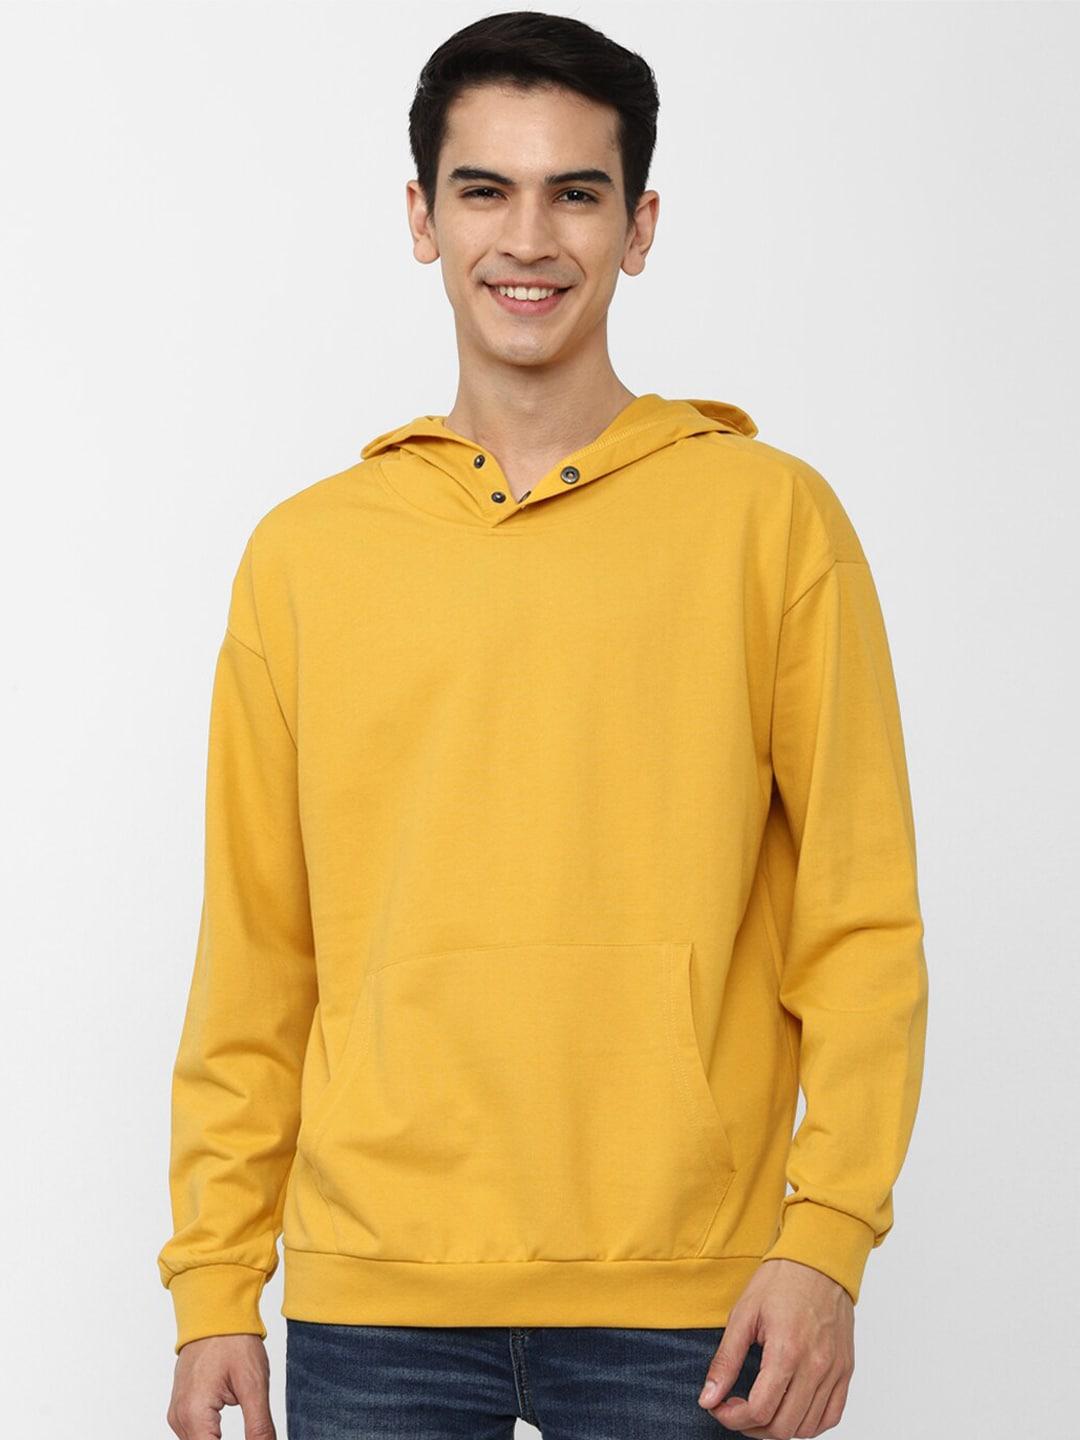 forever-21-men-yellow-hooded-solid-sweatshirt